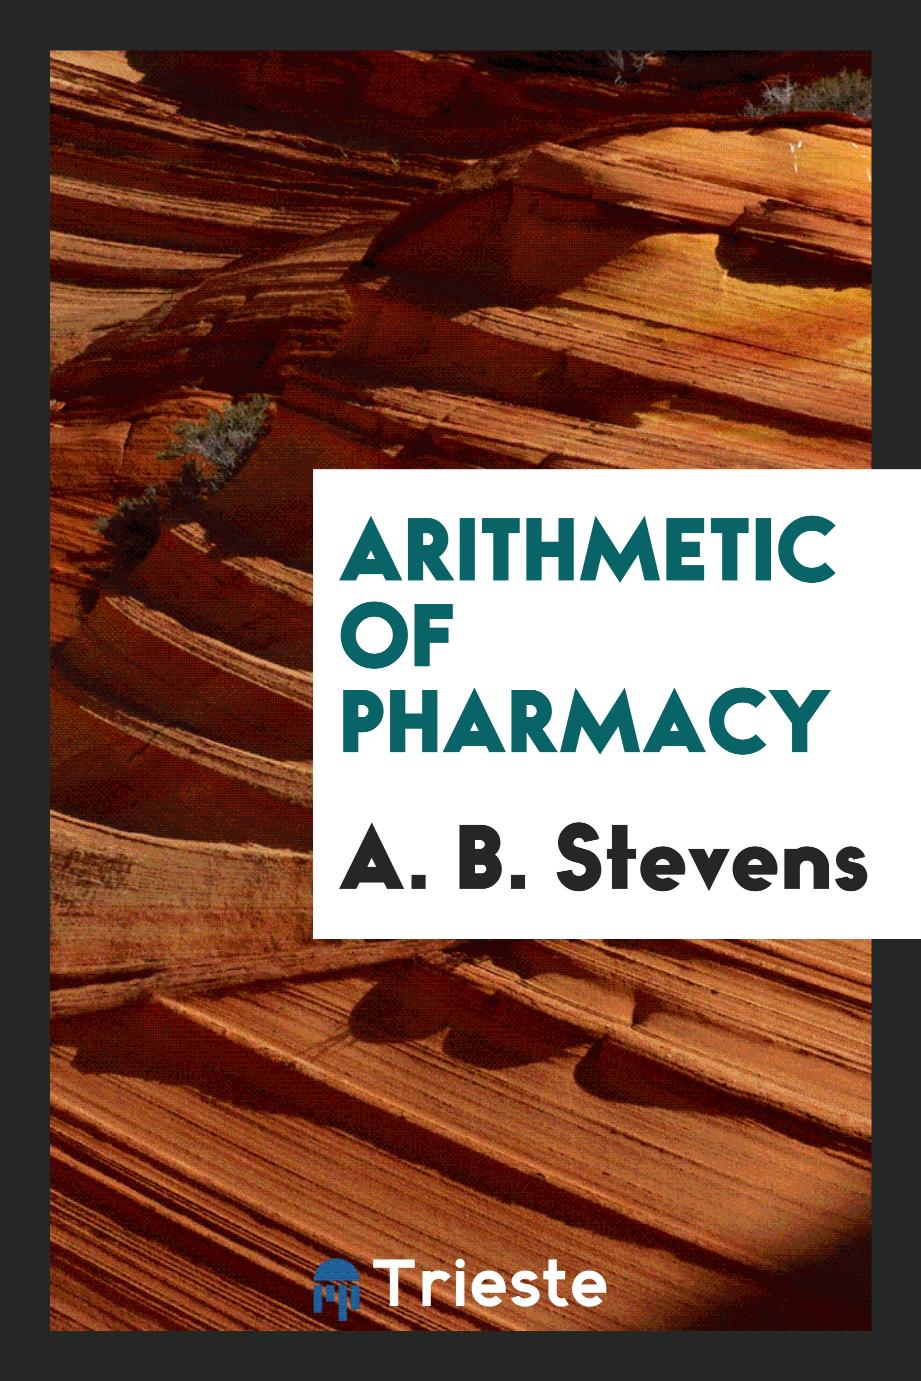 Arithmetic of Pharmacy